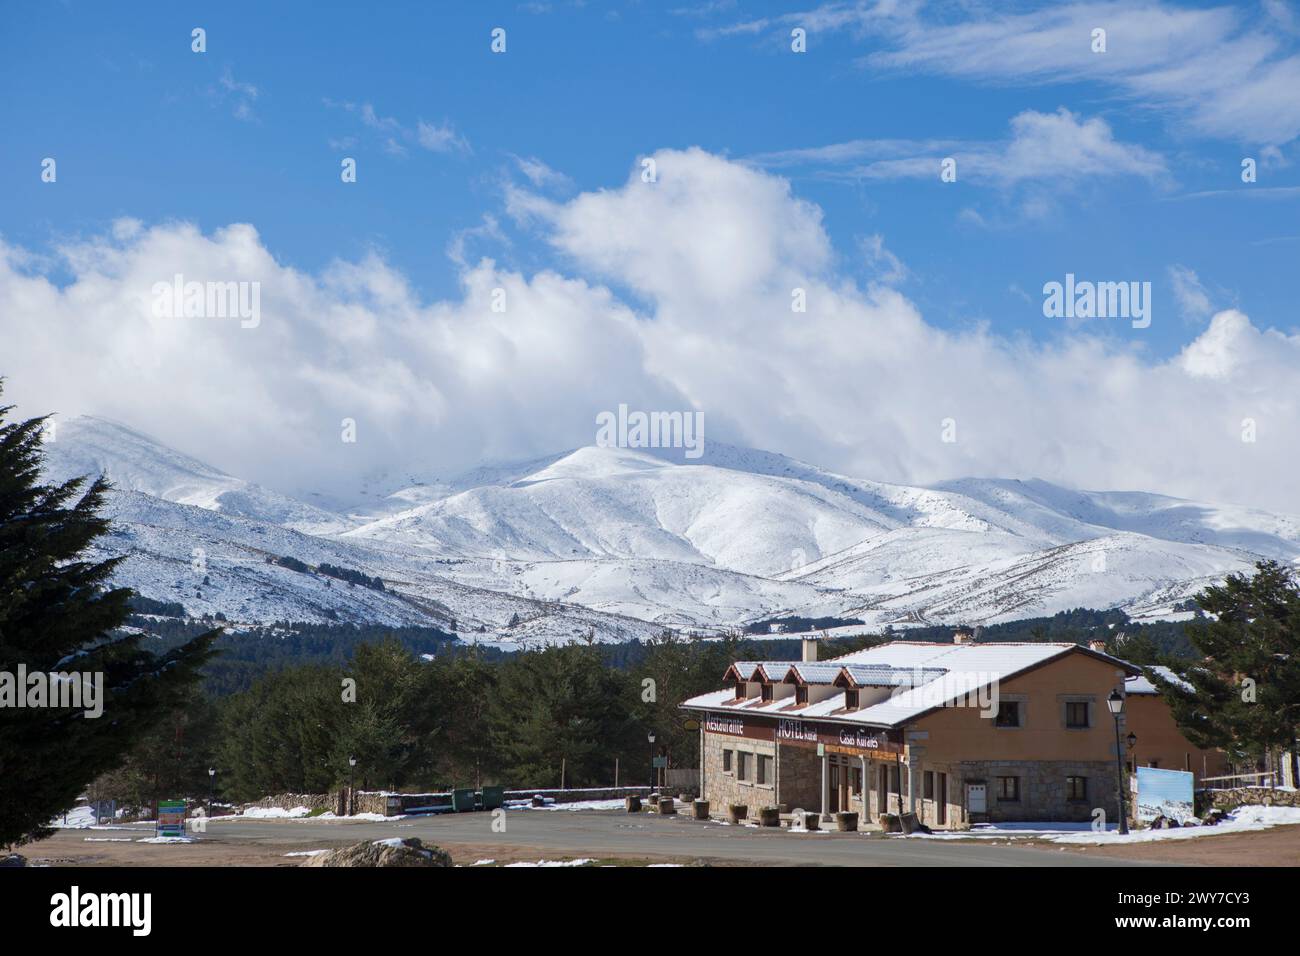 Tourist accommodations on the outskirts of town, Sierra de Gredos, Hoyos del Espino, Avila, Spain Stock Photo